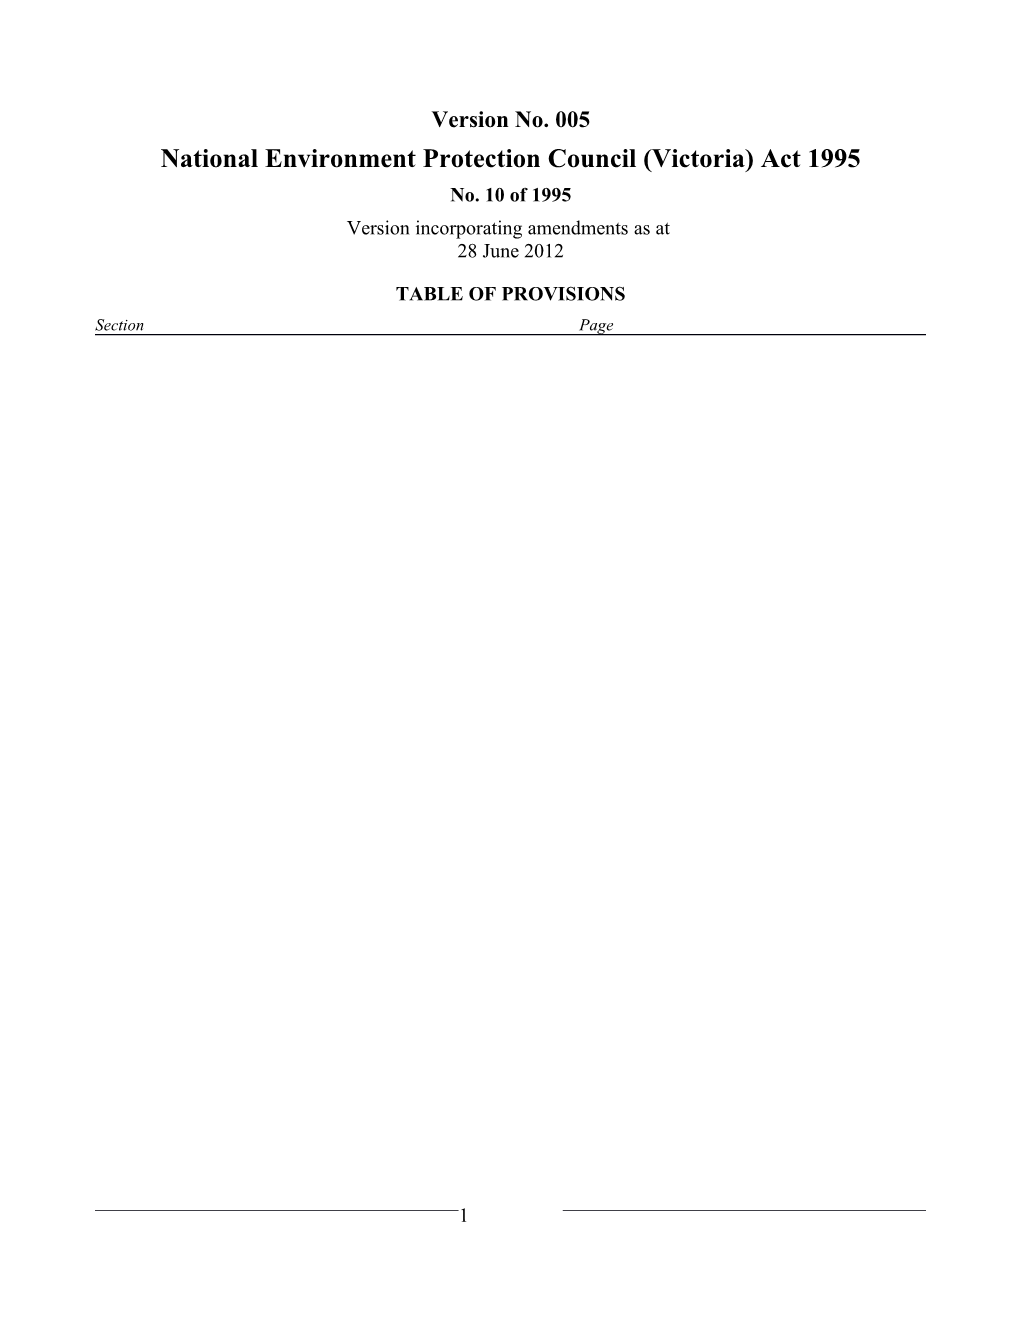 National Environment Protection Council (Victoria) Act 1995